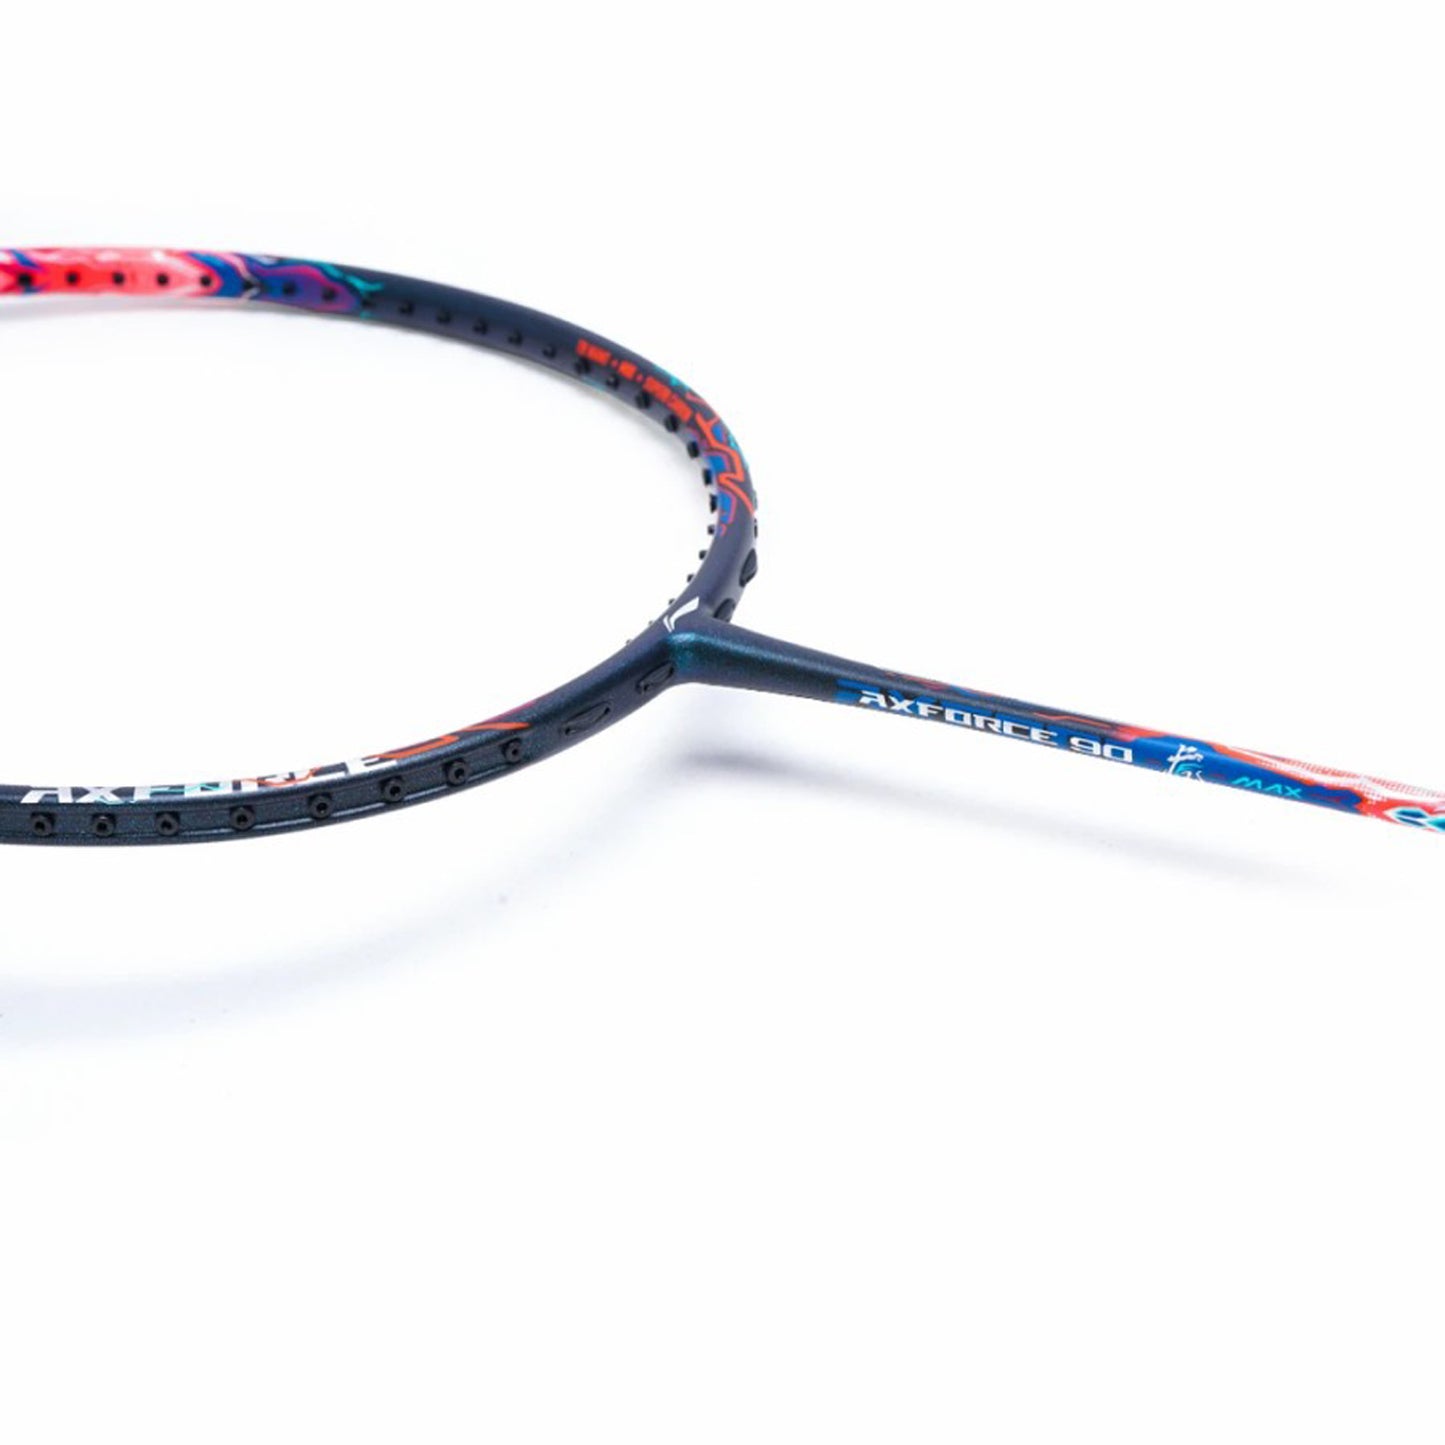 Li-Ning AXForce 90 Unstrung Badminton Racquet, Navy/Red - Best Price online Prokicksports.com